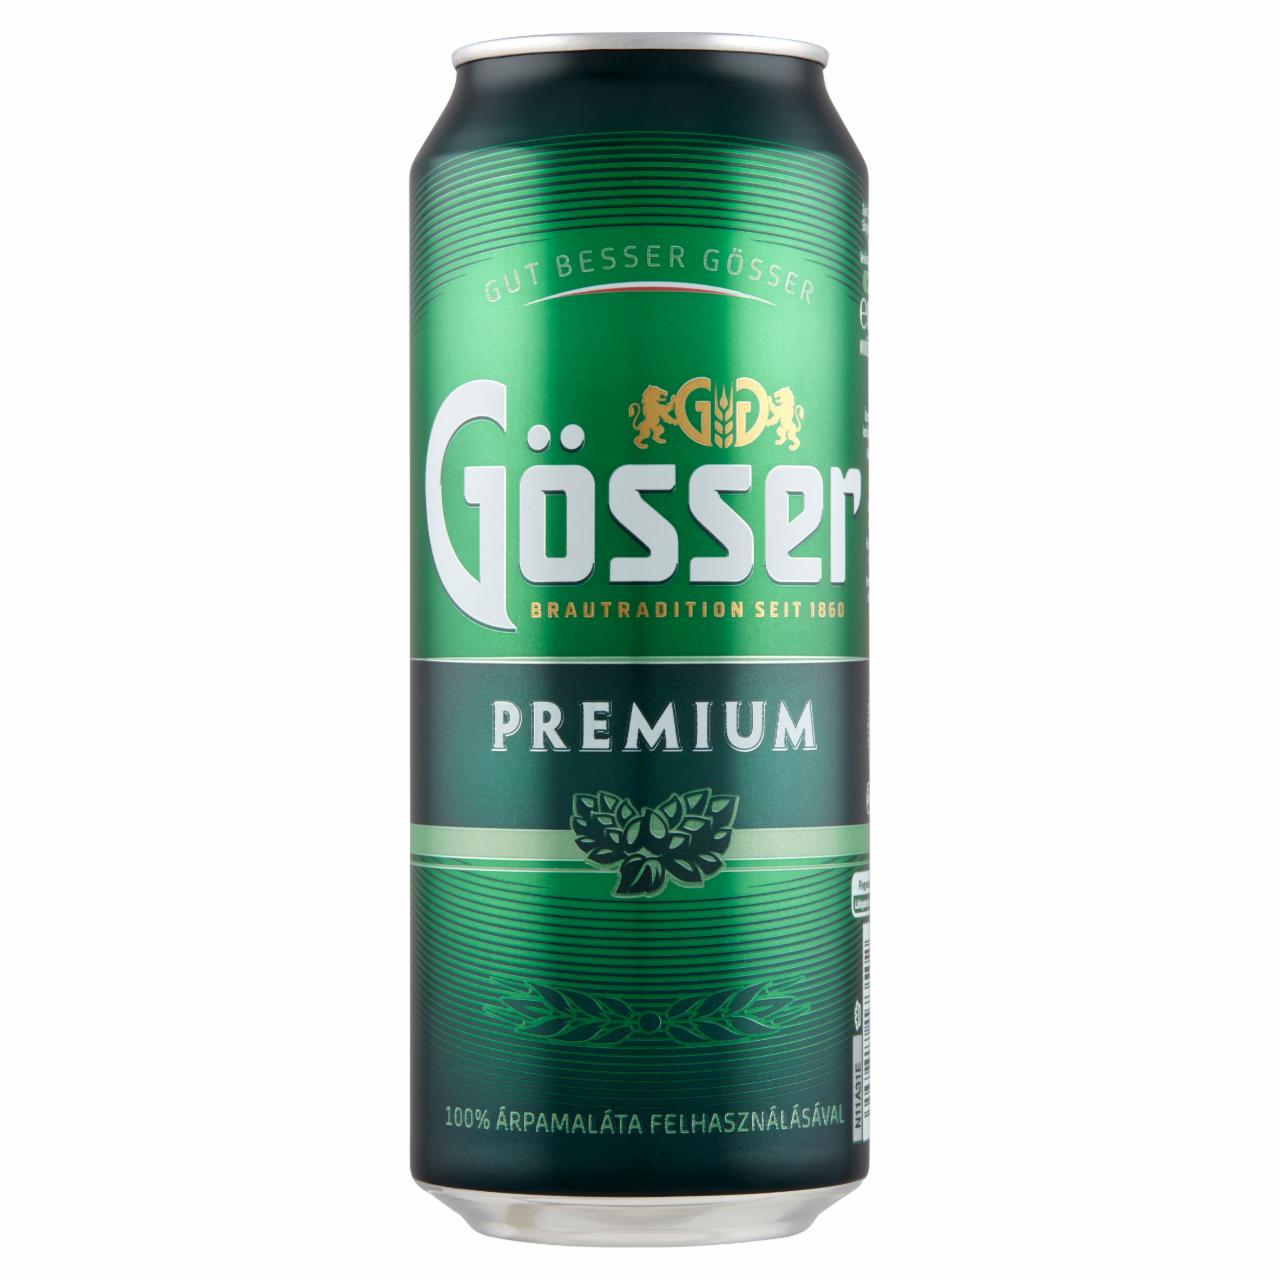 Képek - Gösser Premium minőségi világos sör 5% 0,5 l doboz